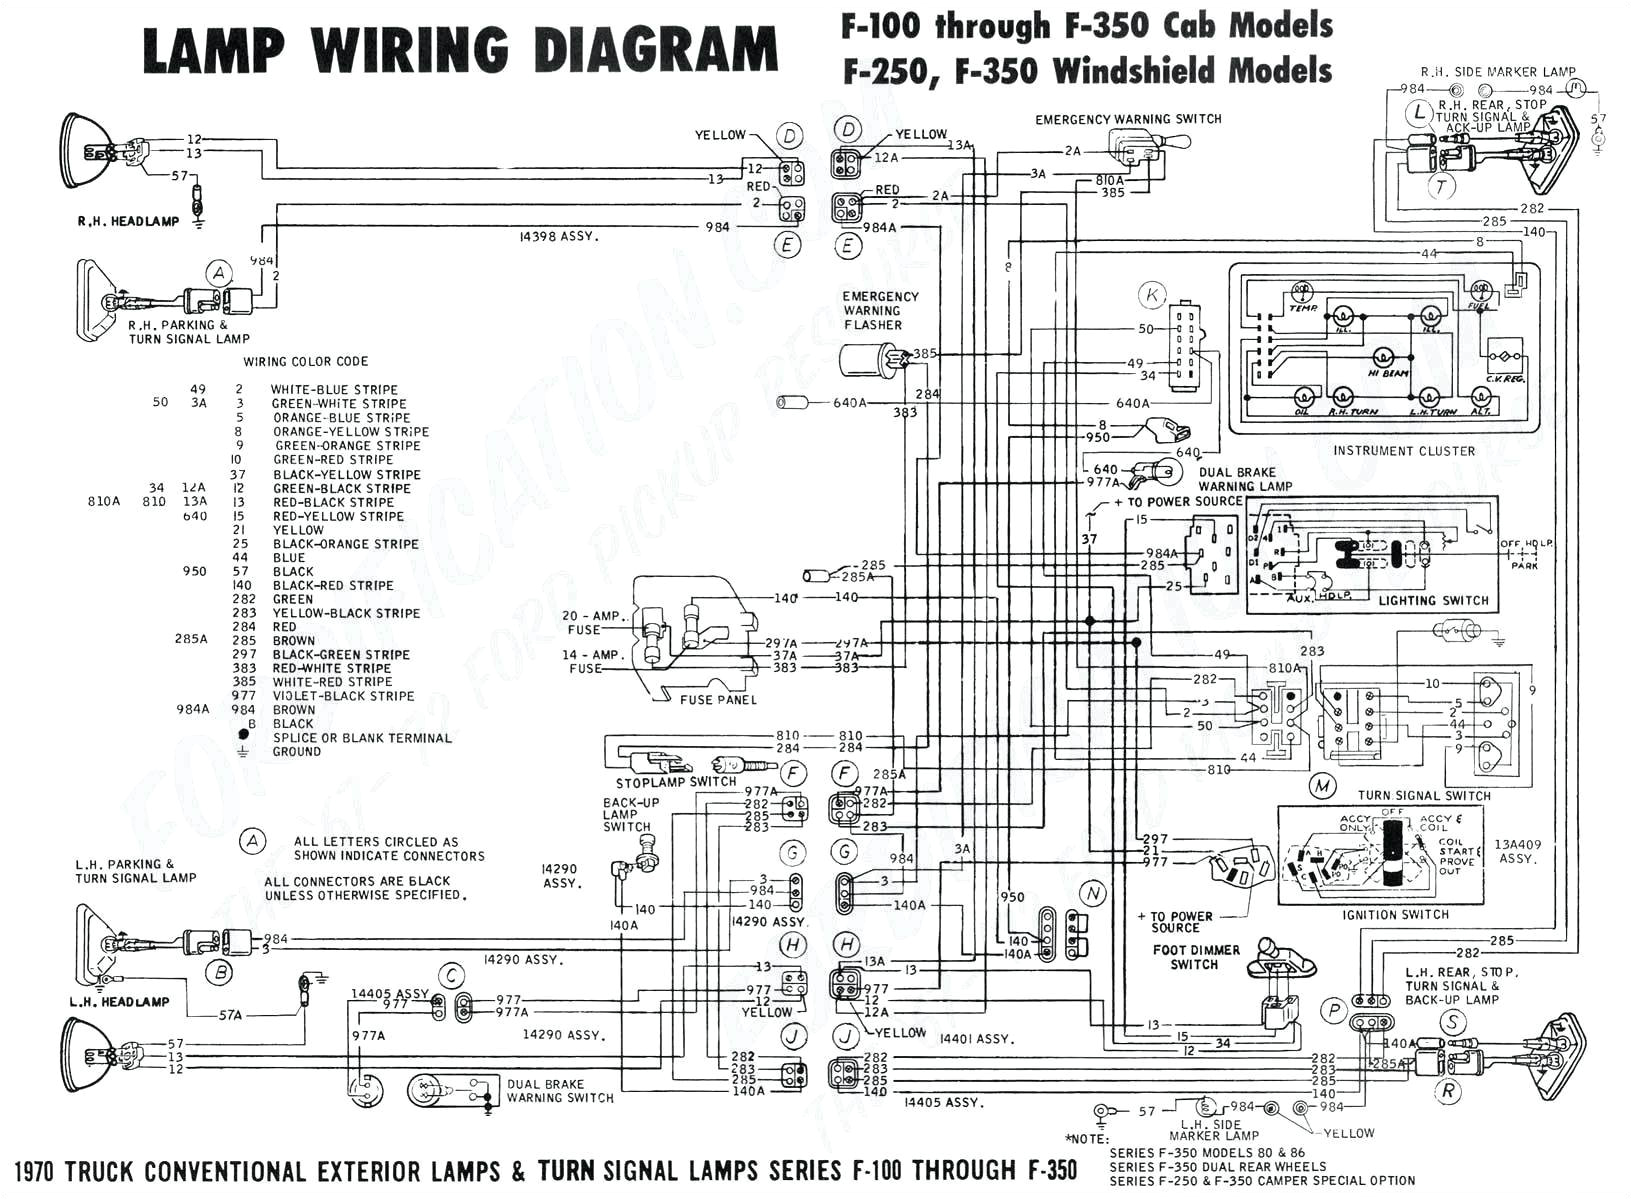 powerflex 70 wiring diagram new micrologix 1100 wiring diagram visio diy enthusiasts wiring diagrams e280a2 of powerflex 70 wiring diagram jpg